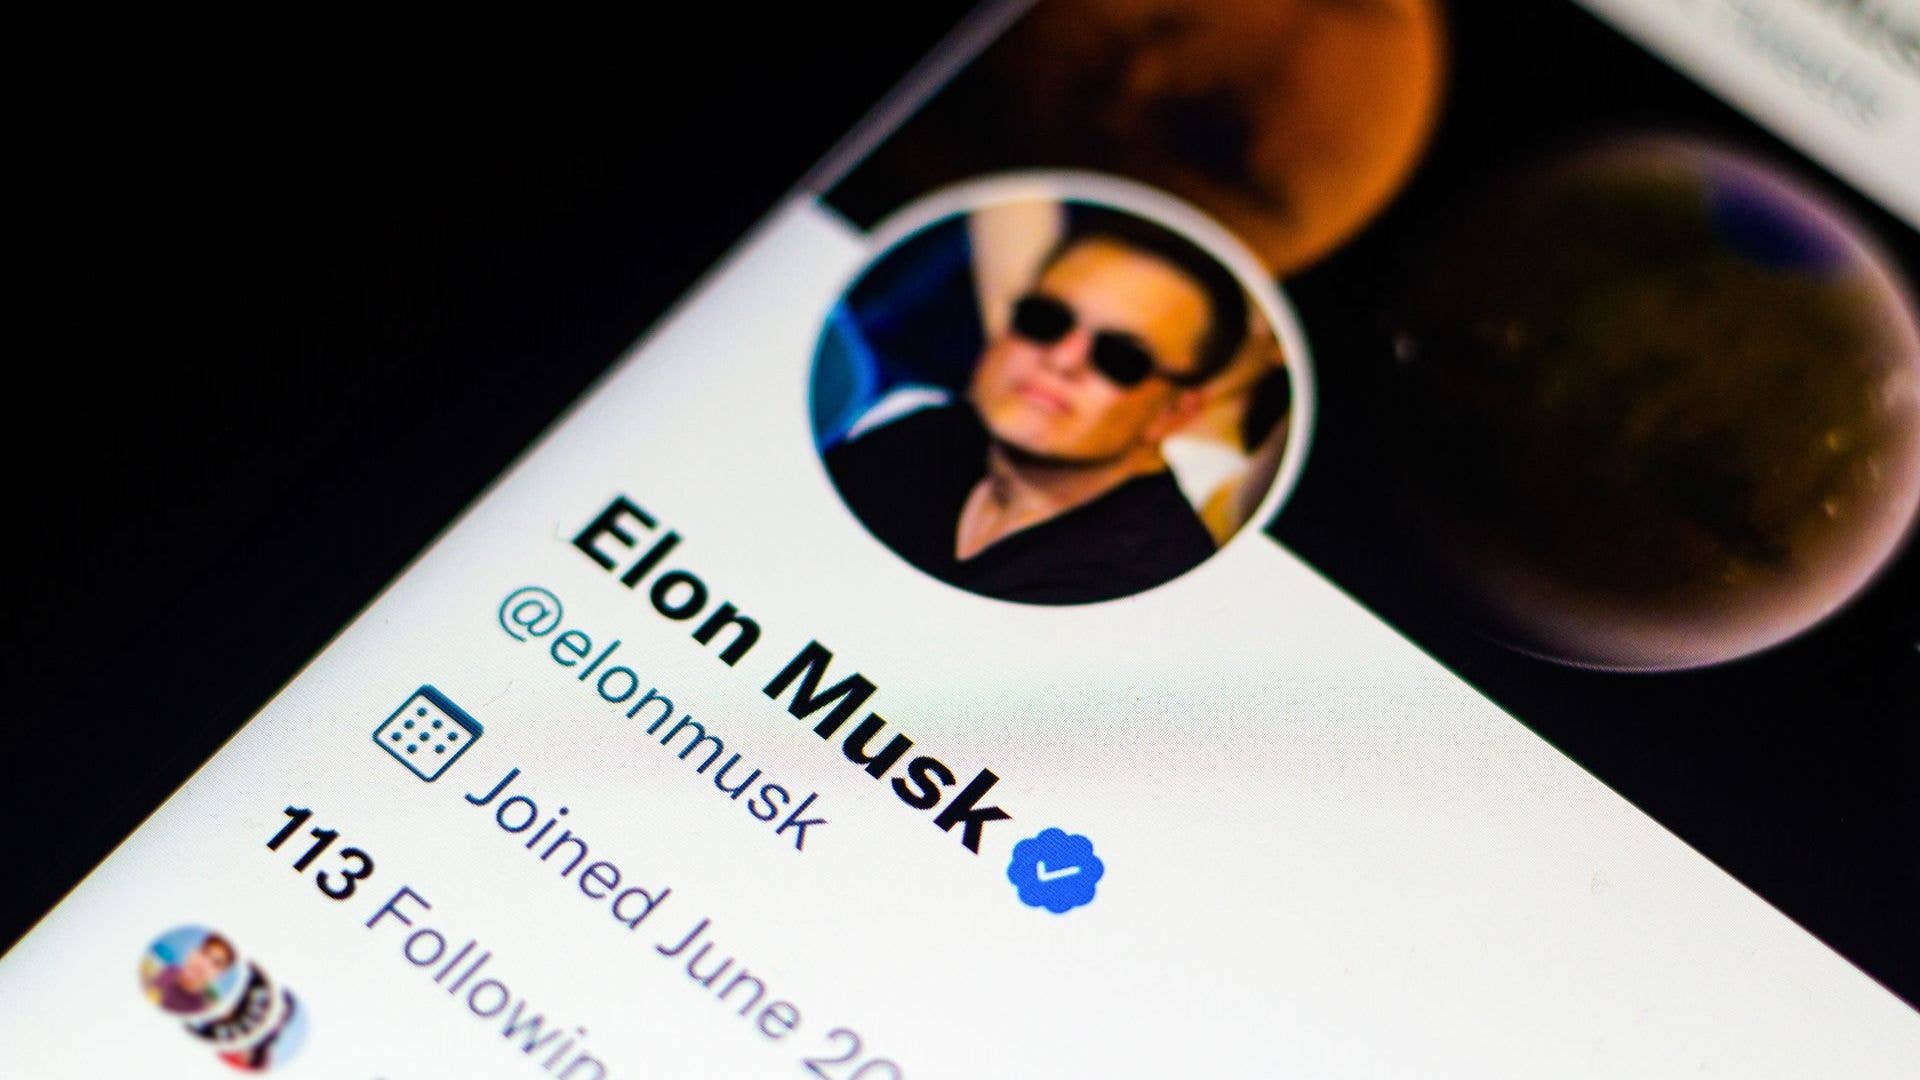 Elon Musk's Twitter account photo illustration